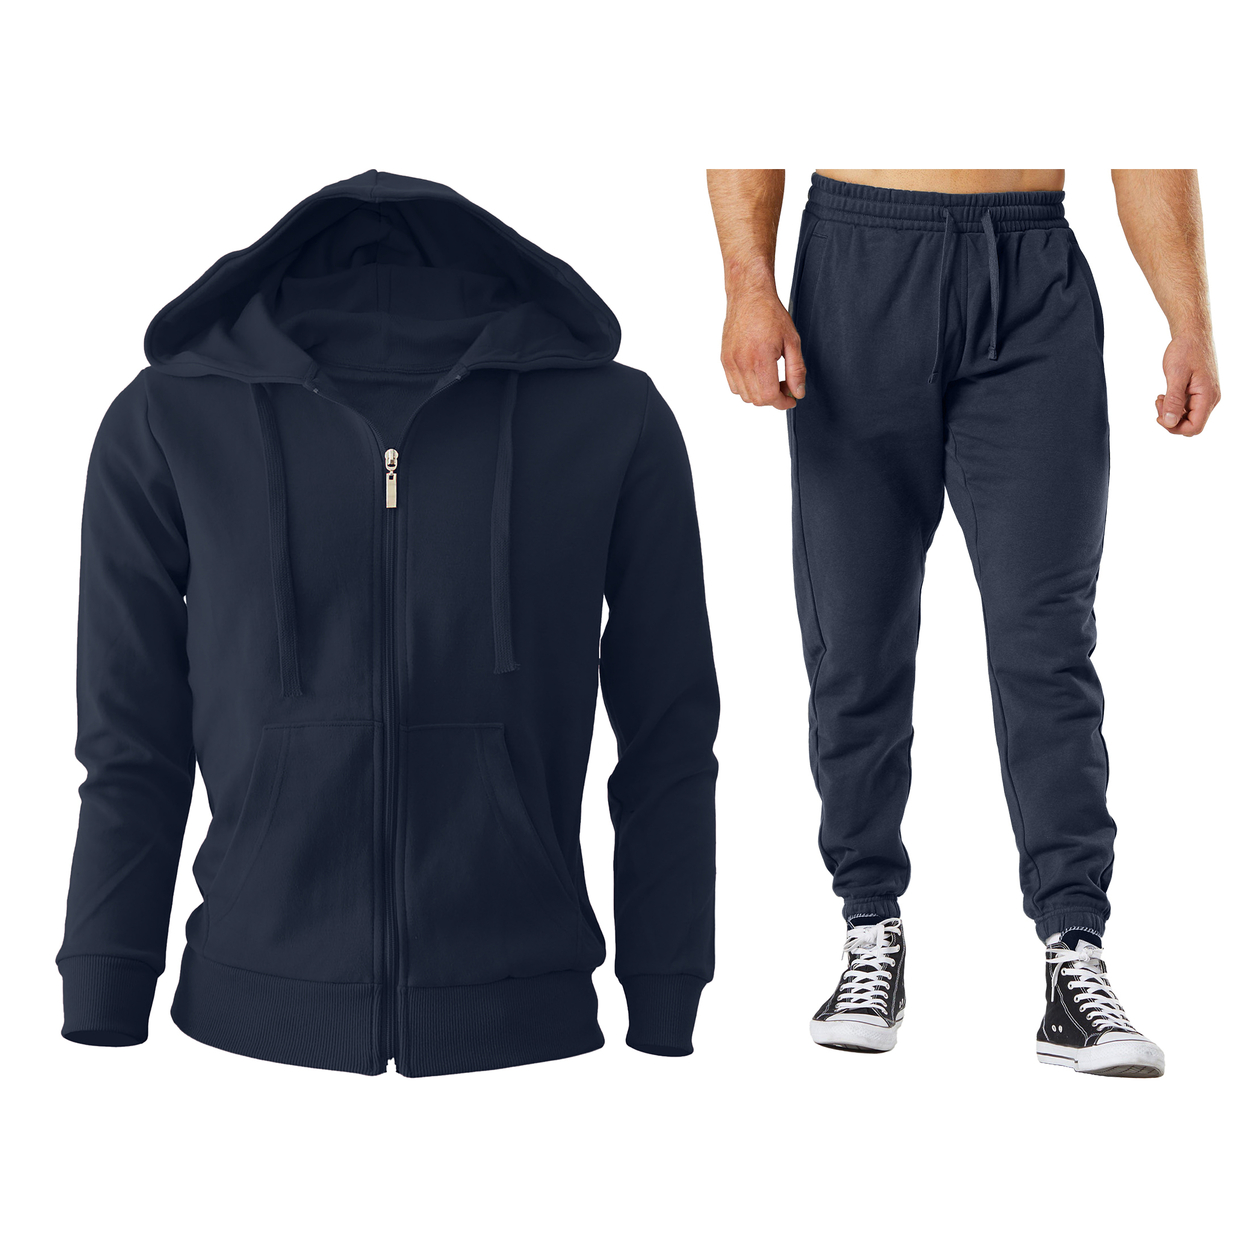 2/4-Piece: Men's Winter Warm Cozy Athletic Multi-Pockets BIG & TALL Sweatsuit Set - Charcoal, 2, Small